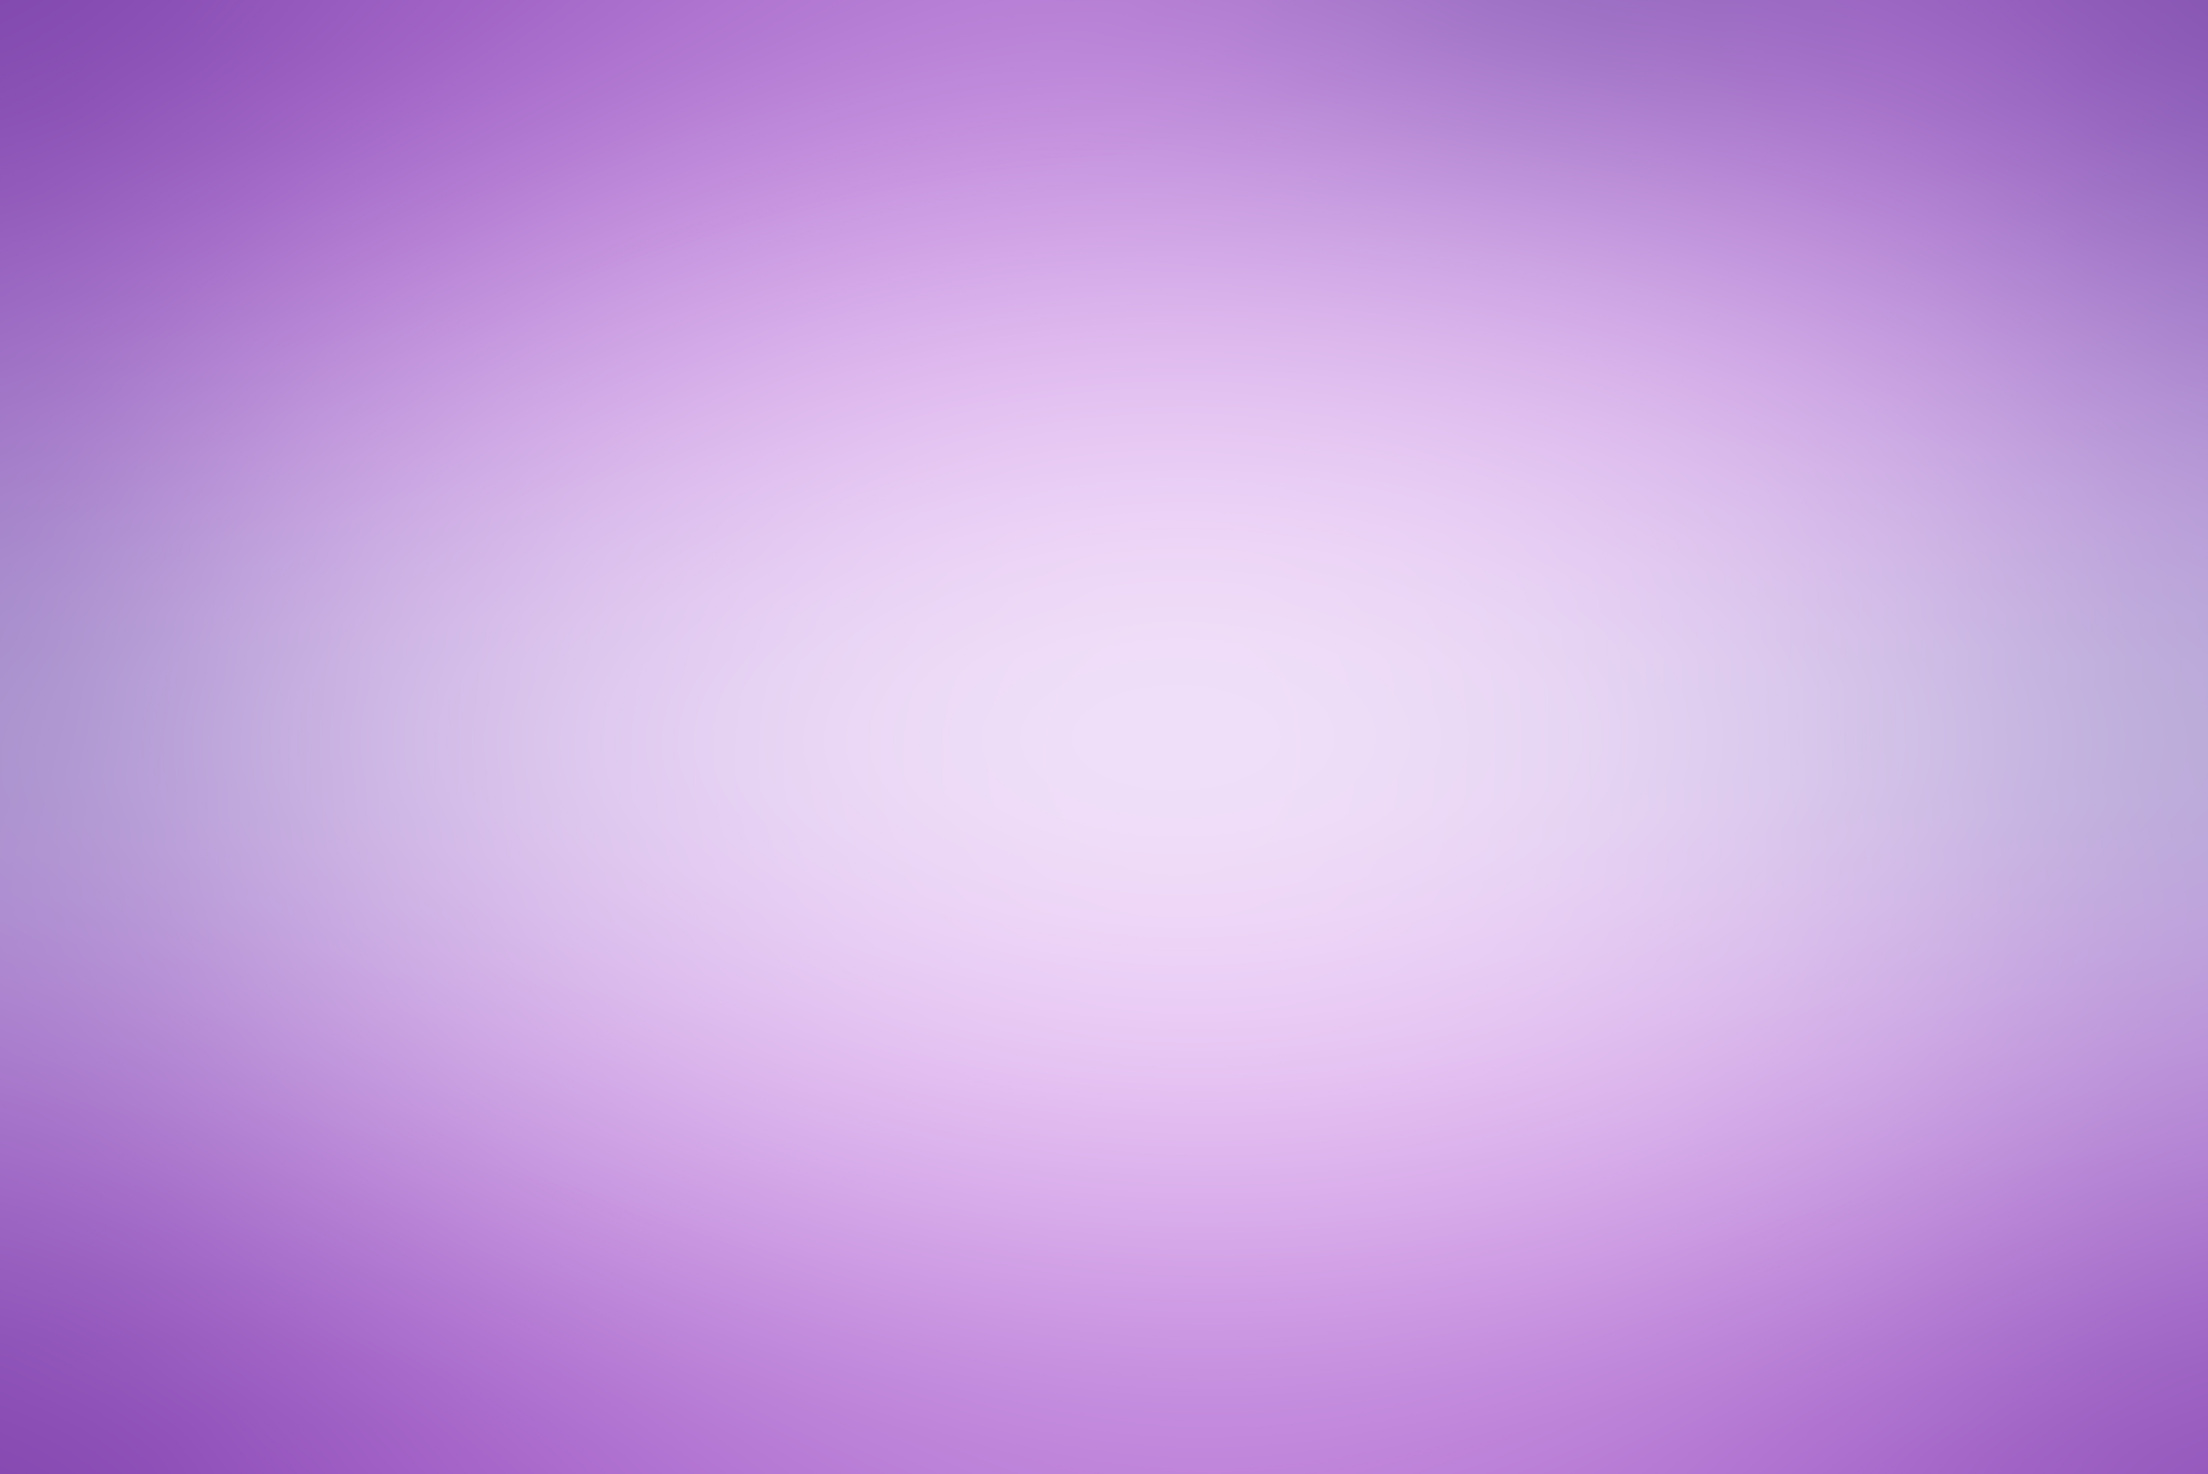 Abstract Defocused Light Purple Blurred Background